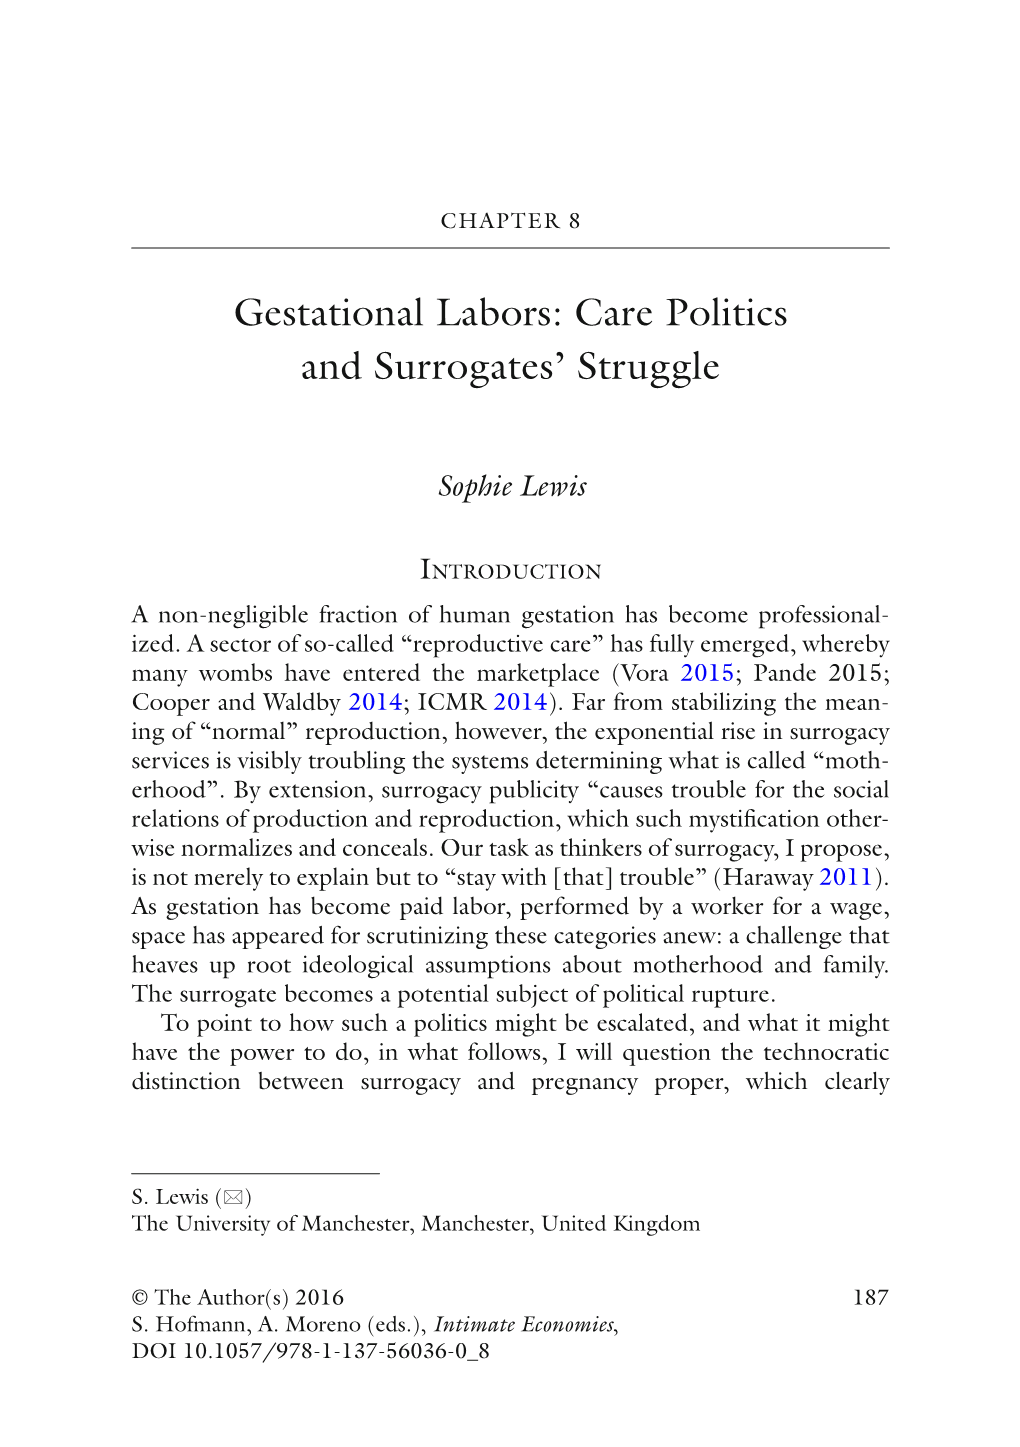 Gestational Labors: Care Politics and Surrogates’ Struggle